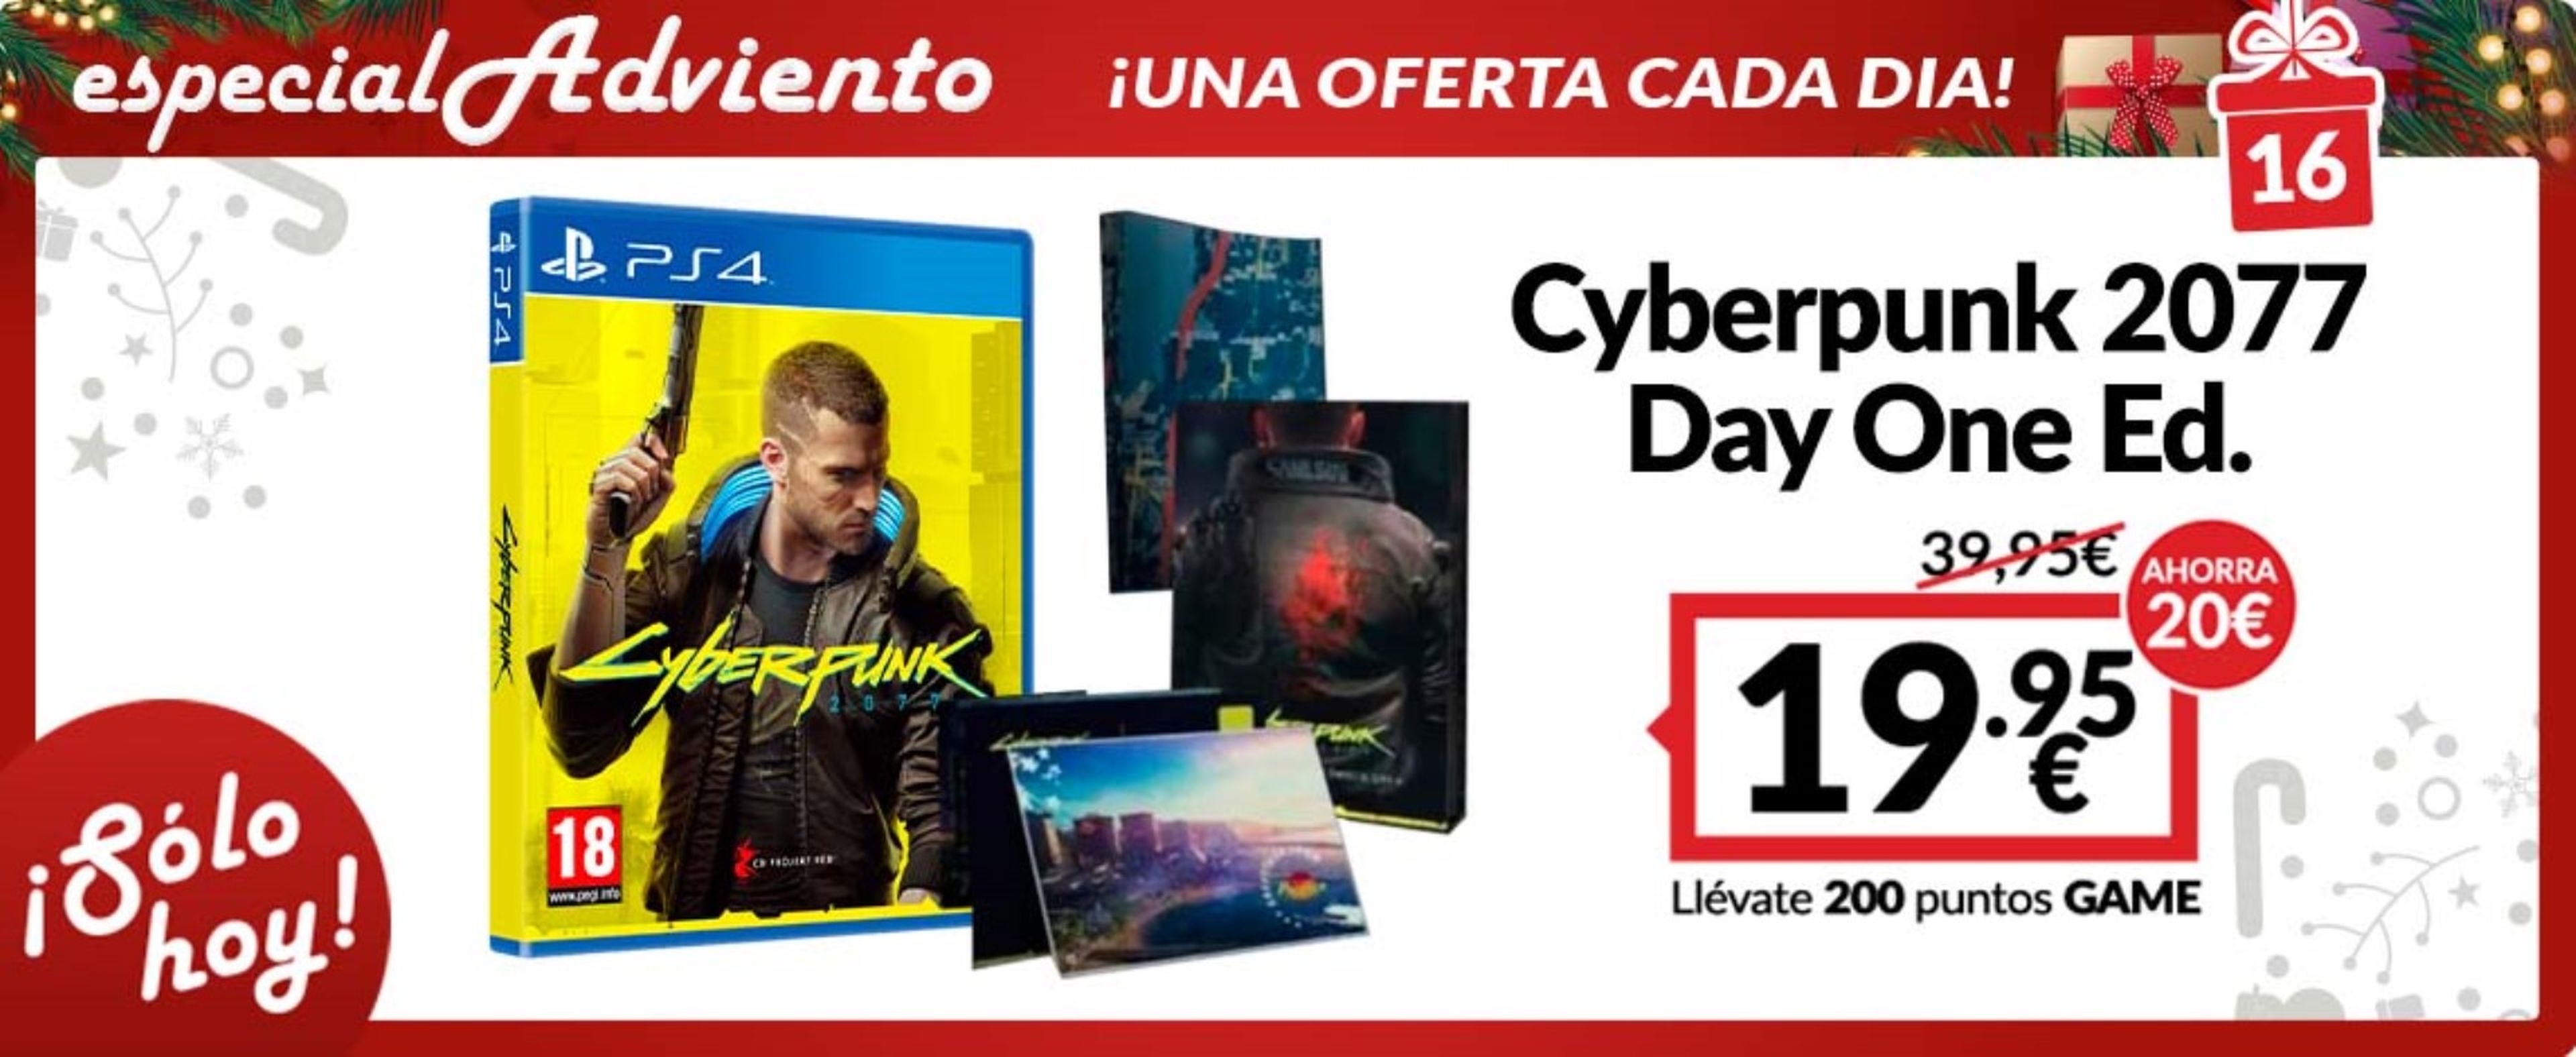 Cyberpunk 2077 Edición Day One. Playstation 4